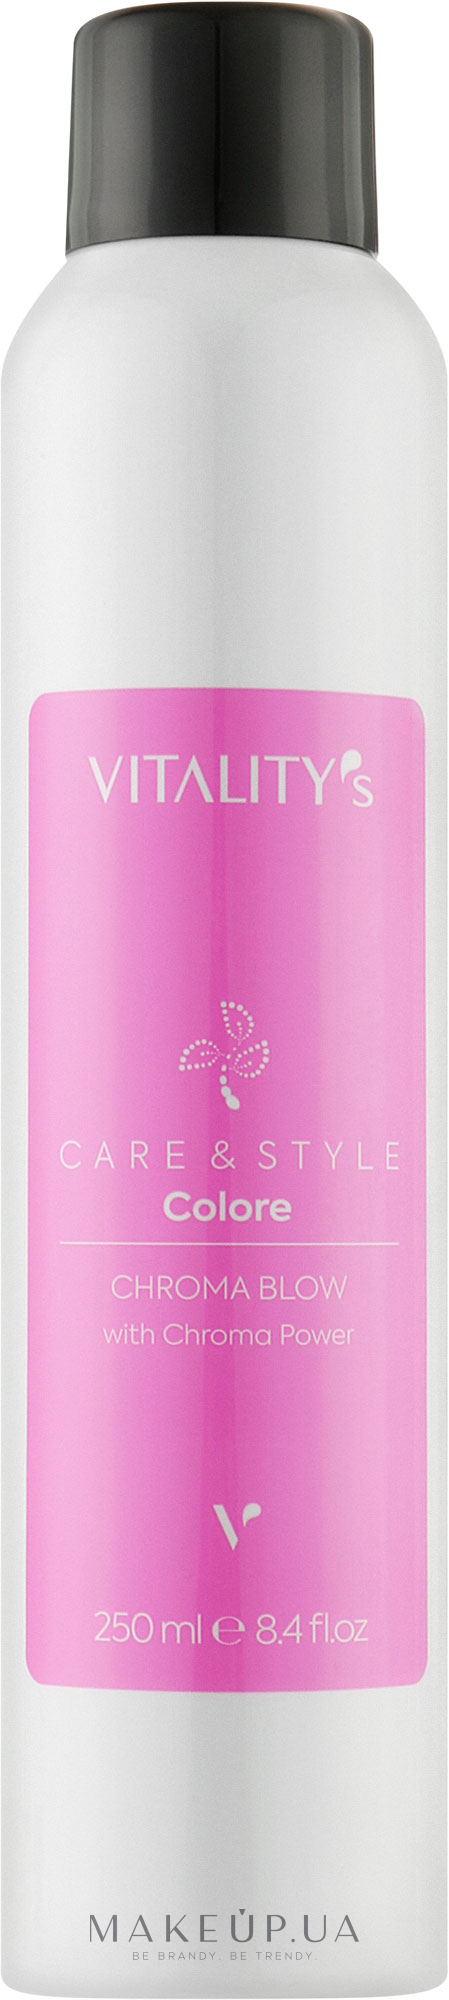 Спрей-блеск для окрашенных волос - Vitality's C&S Colore Chroma Blow — фото 250ml